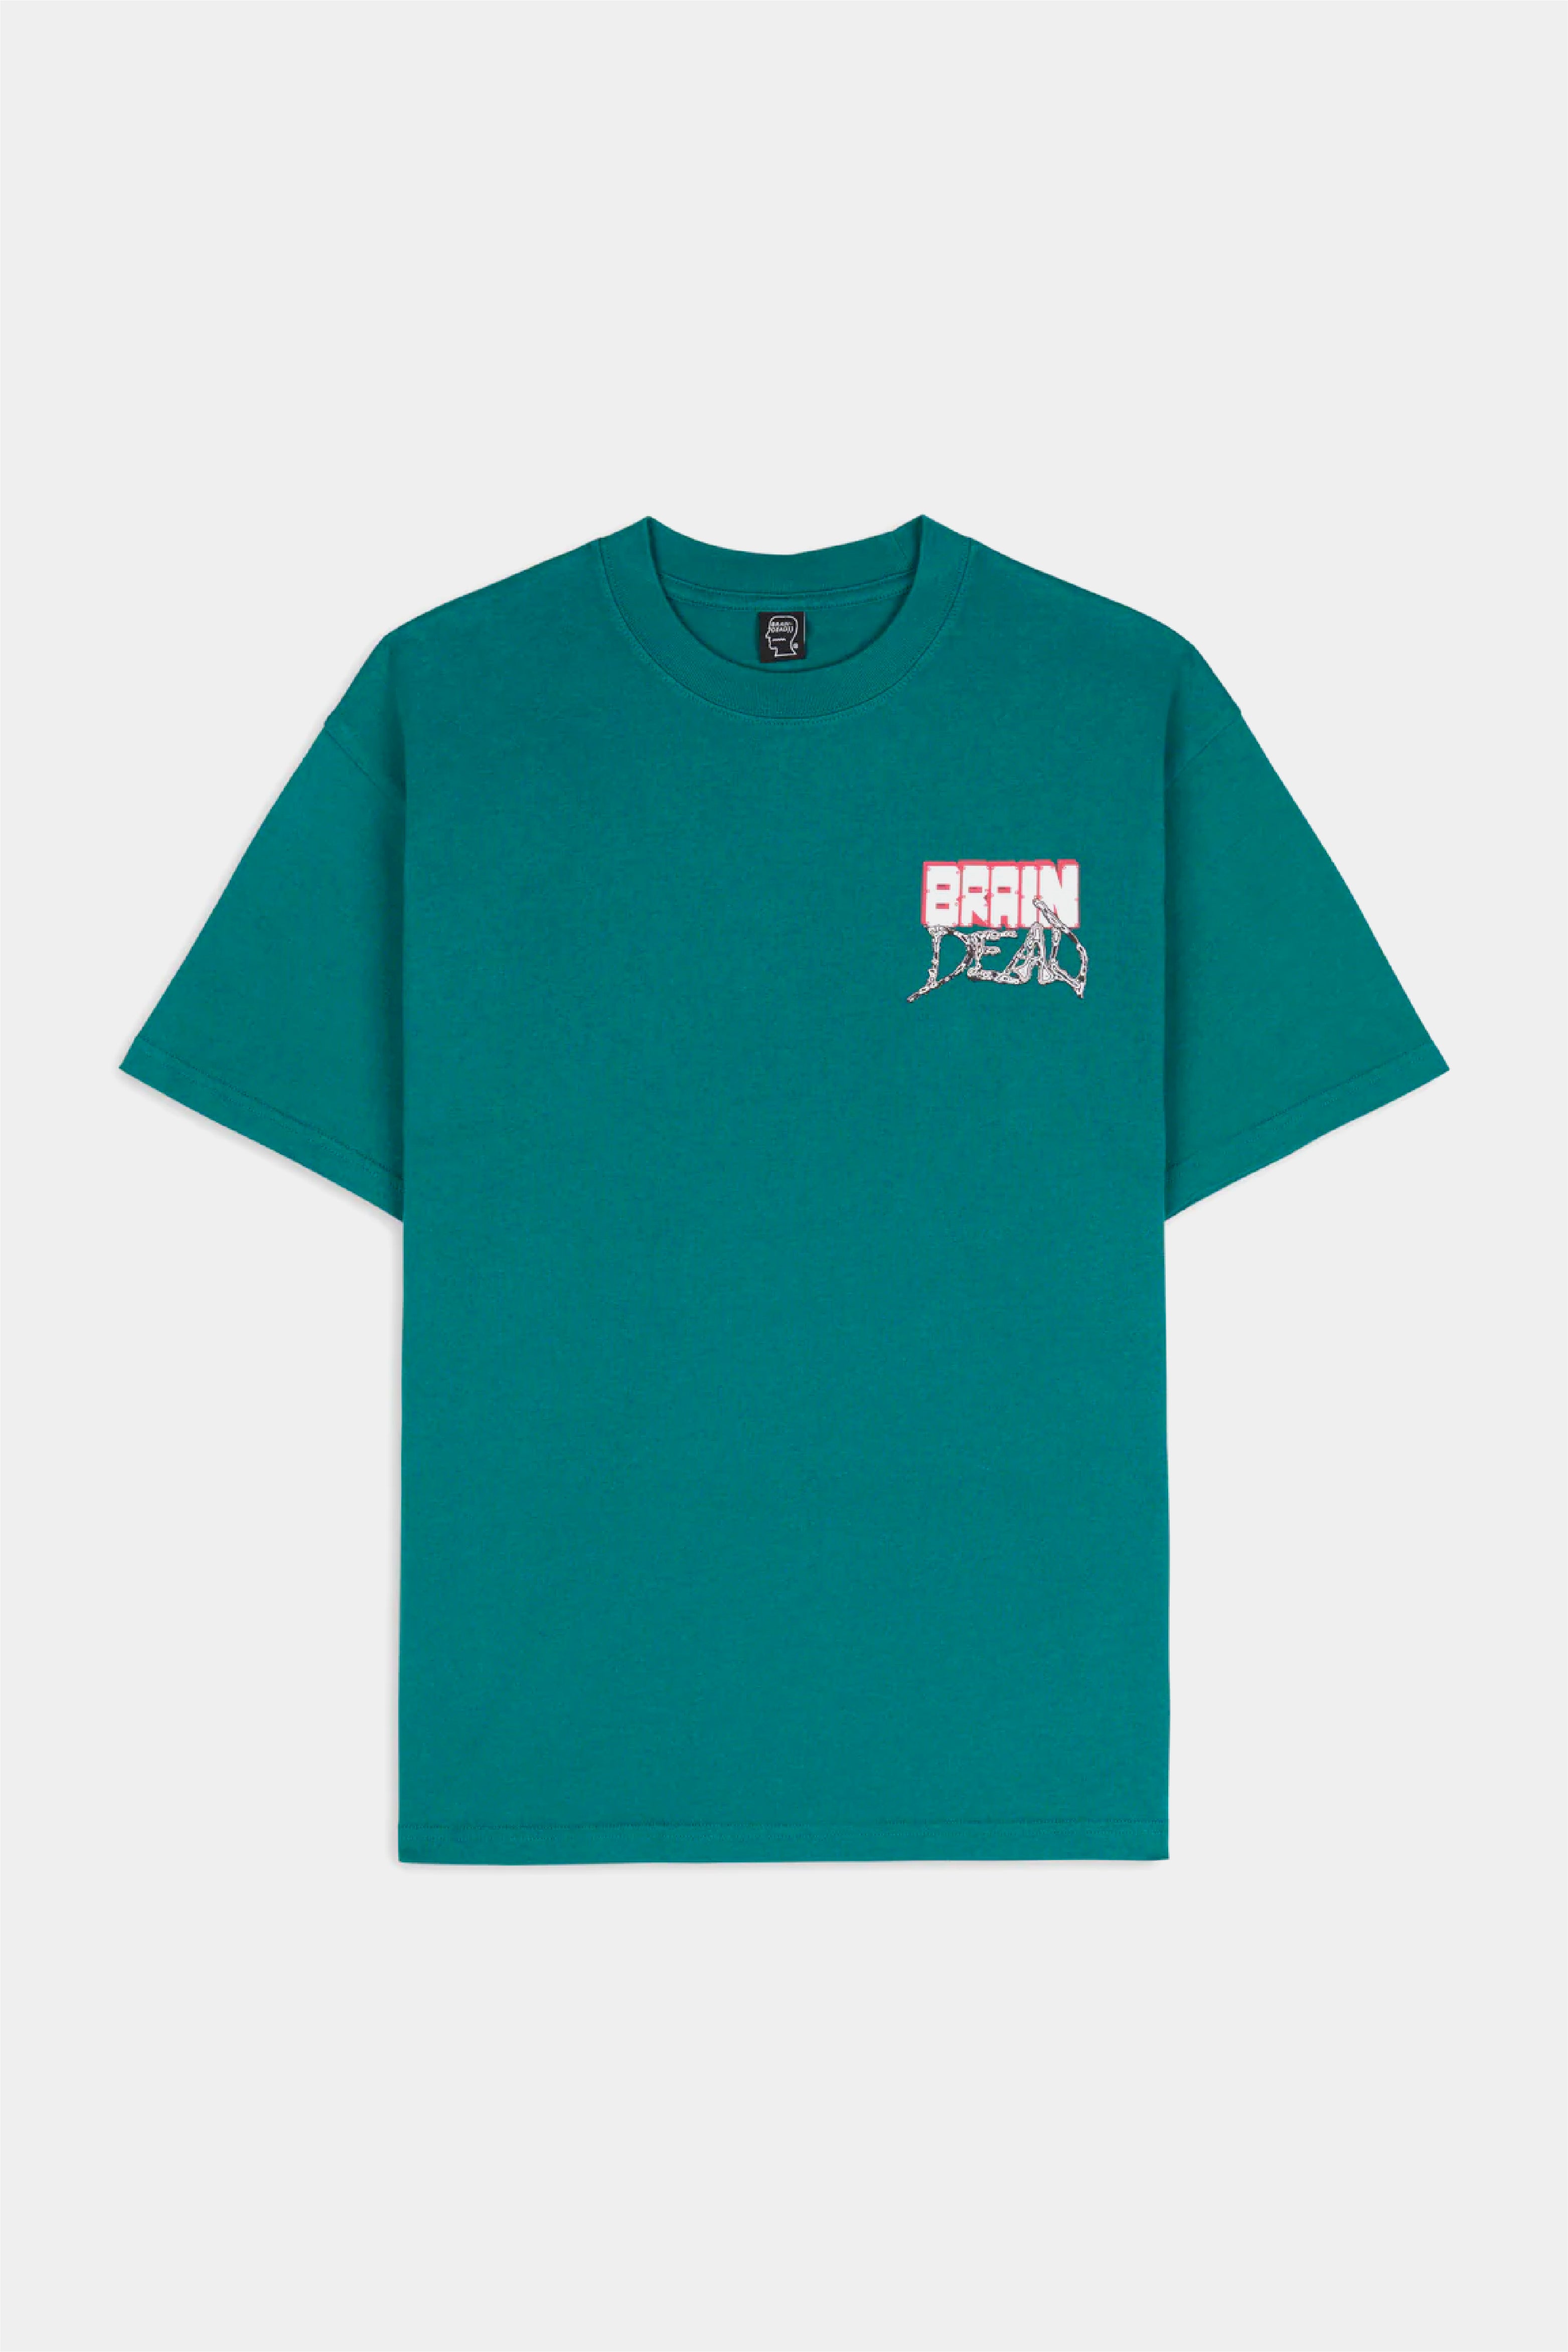 Selectshop FRAME - BRAIN DEAD Psychosis T-Shirt T-Shirts Dubai